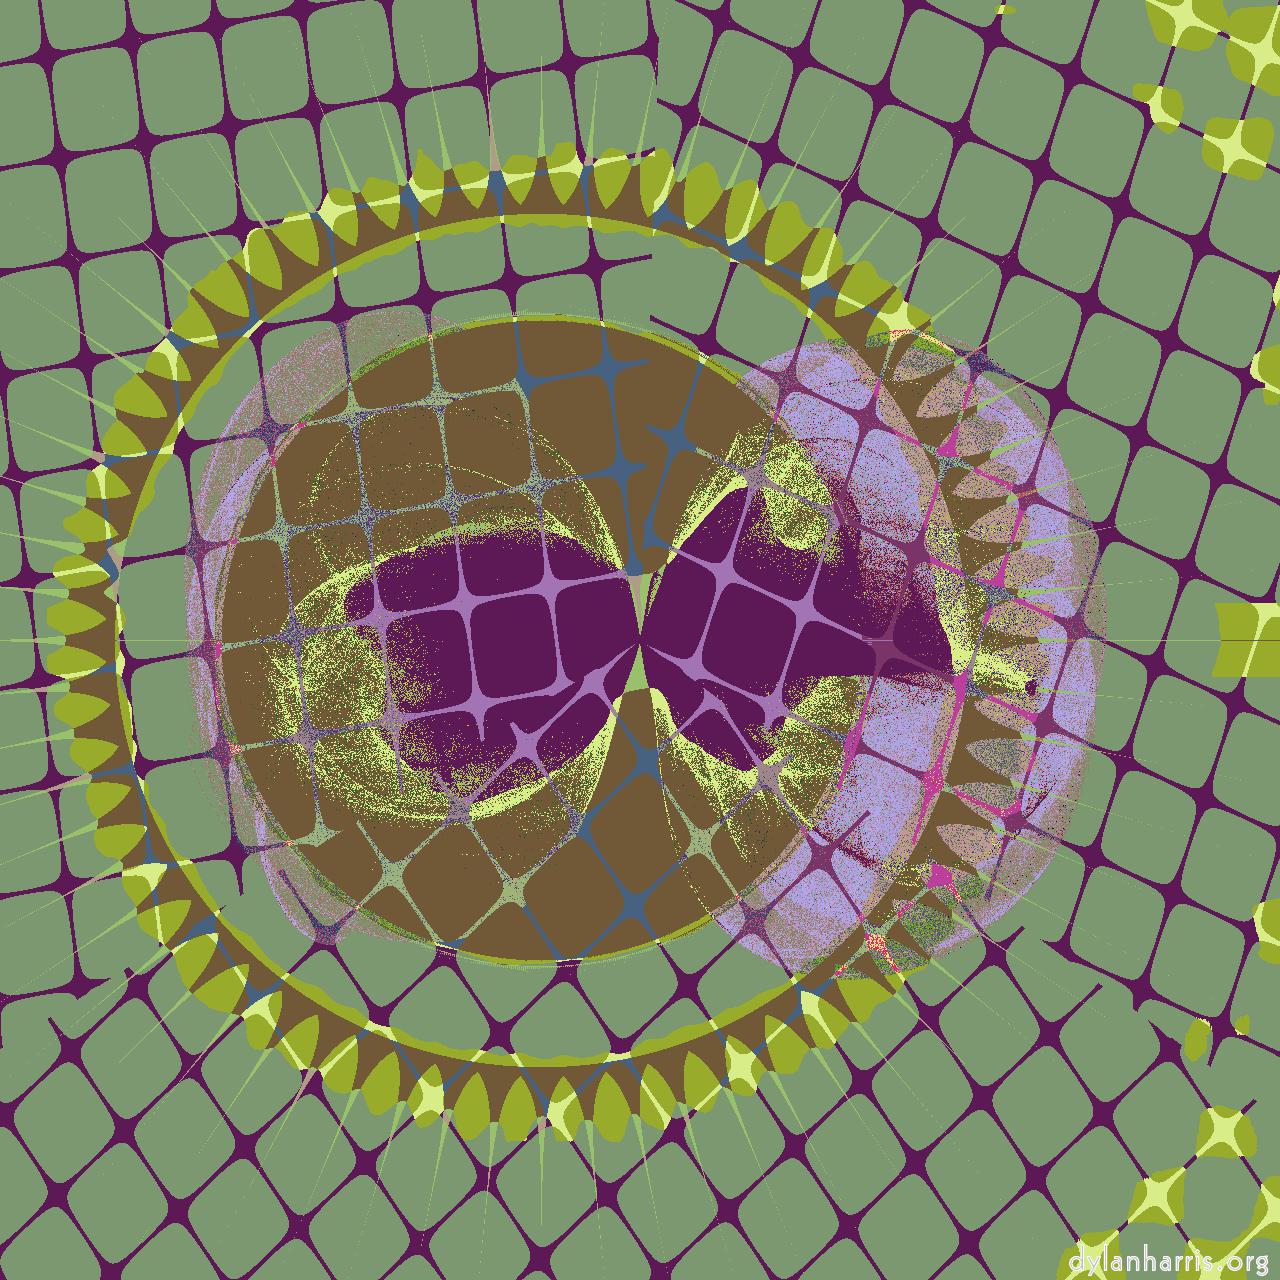 variations :: attractor grid 2